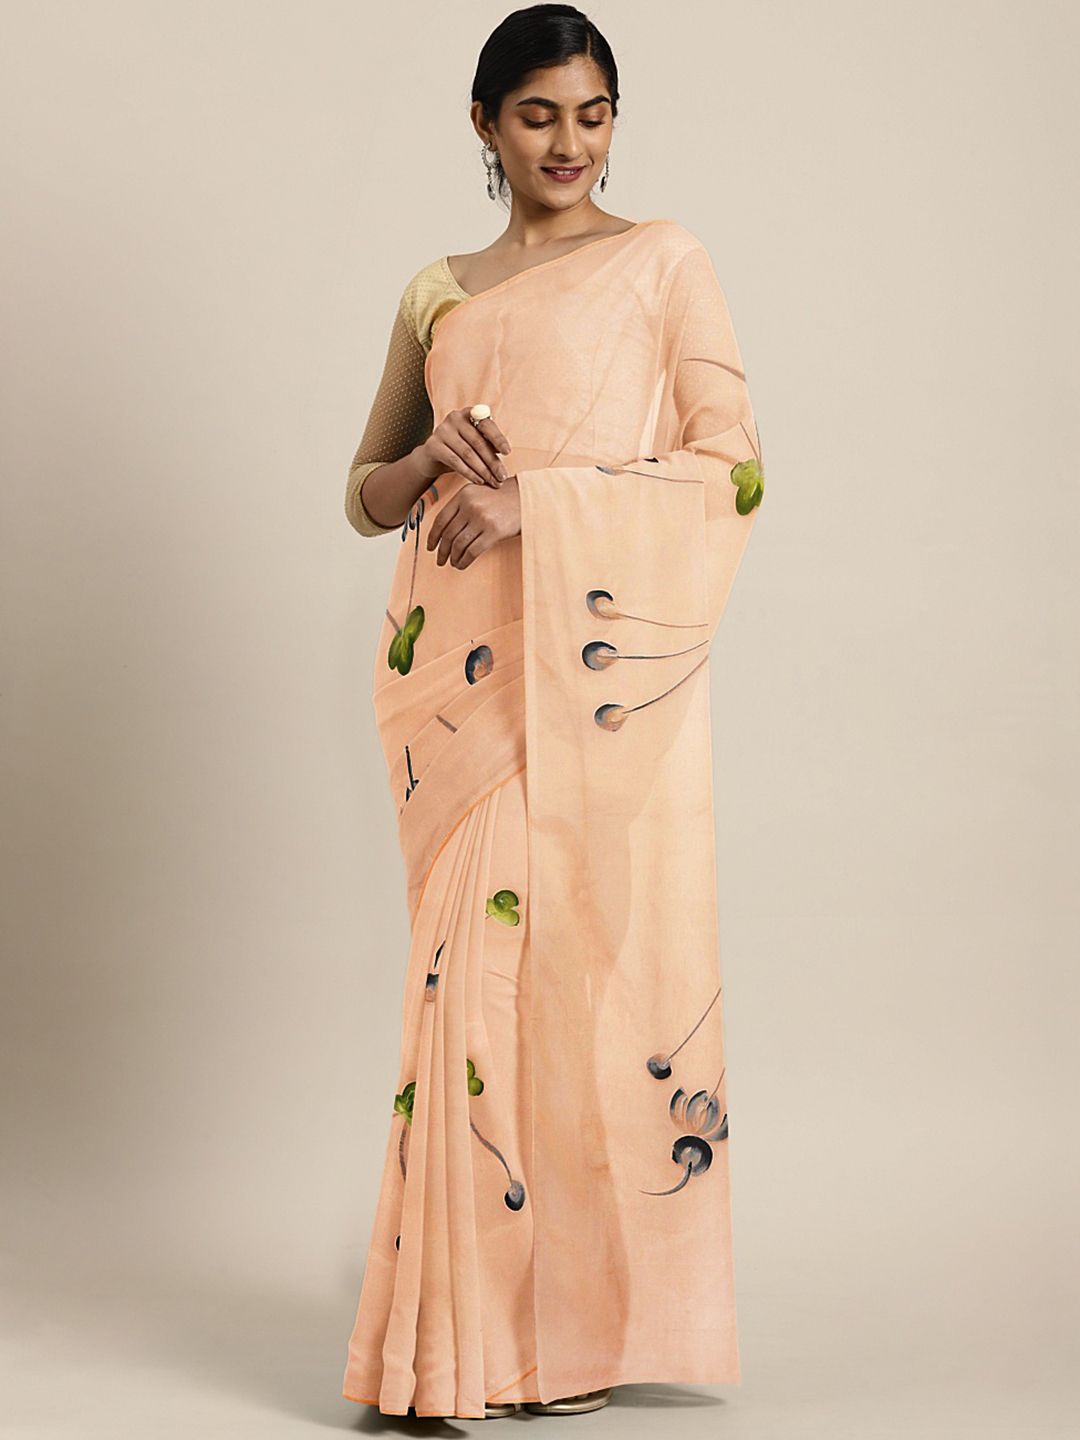 Kalakari India Peach-Coloured & Black Floral Hand Painted Saree Price in India